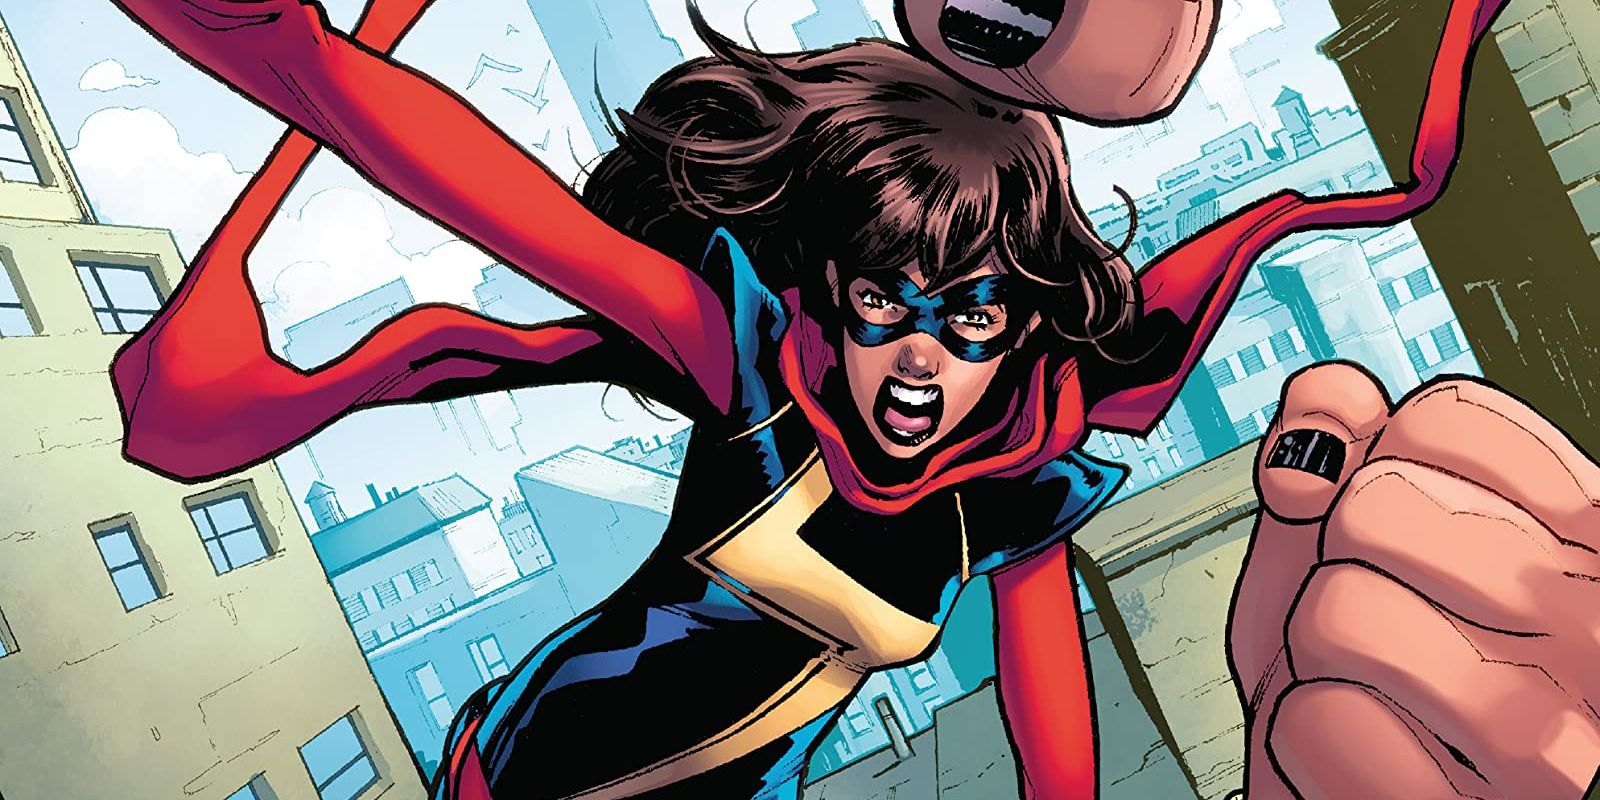 Kamala Khan flies into action as Ms. Marvel